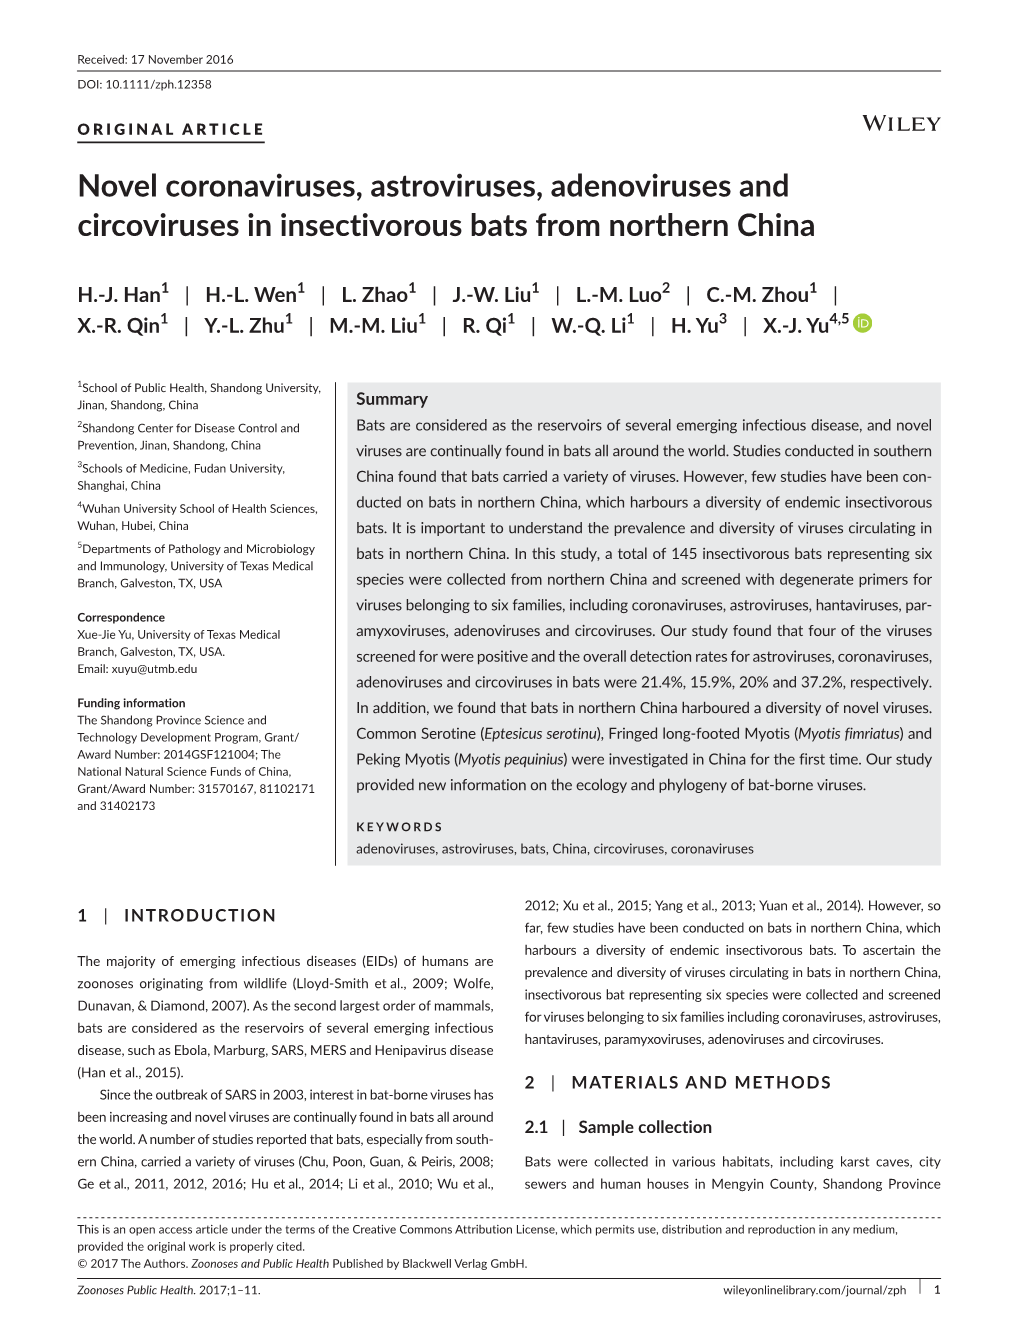 Novel Coronaviruses, Astroviruses, Adenoviruses and Circoviruses in Insectivorous Bats from Northern China